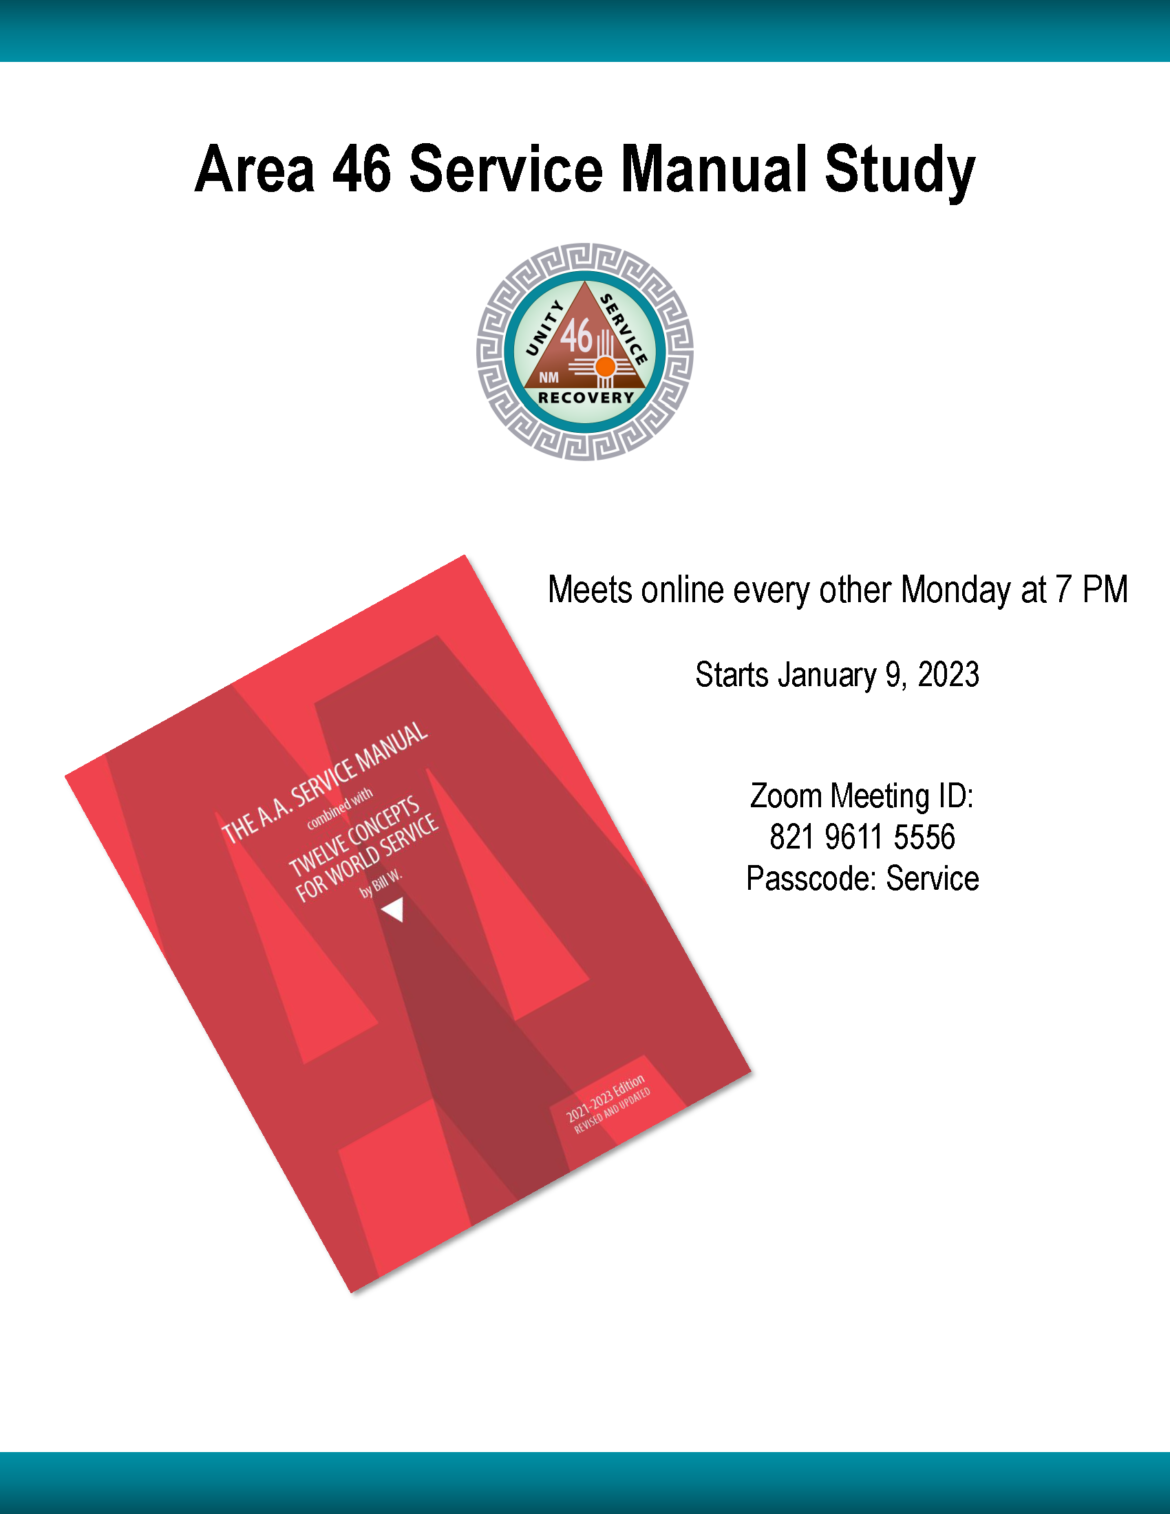 Area 46 Service Manual Study Flyer